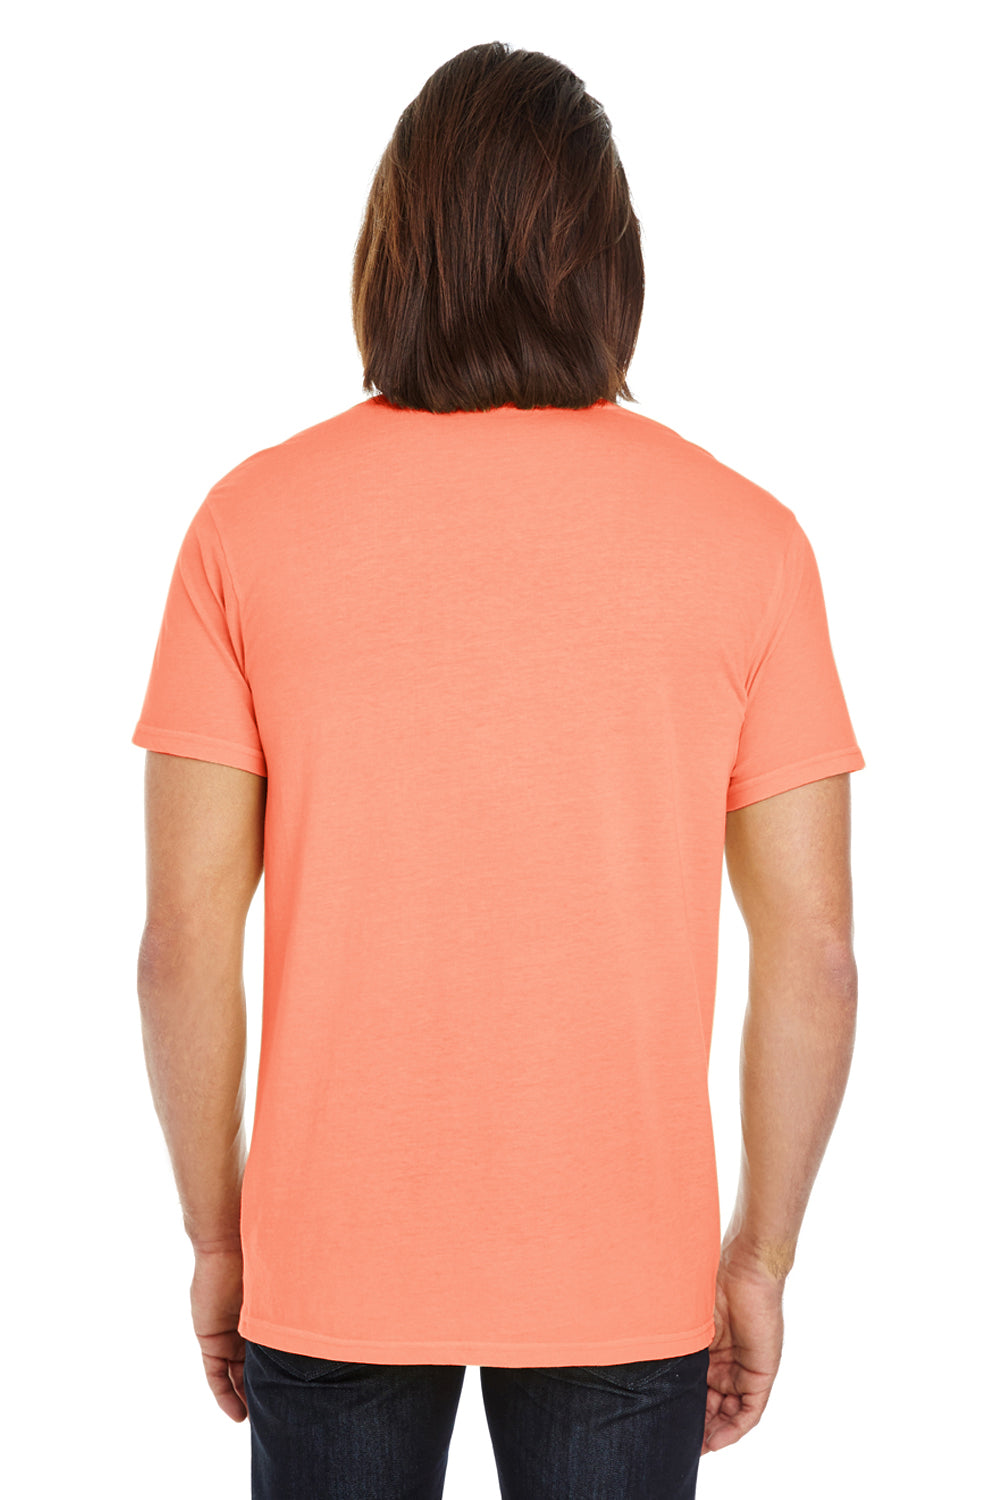 Threadfast Apparel 130A Mens Short Sleeve Crewneck T-Shirt Tangerine Orange Back